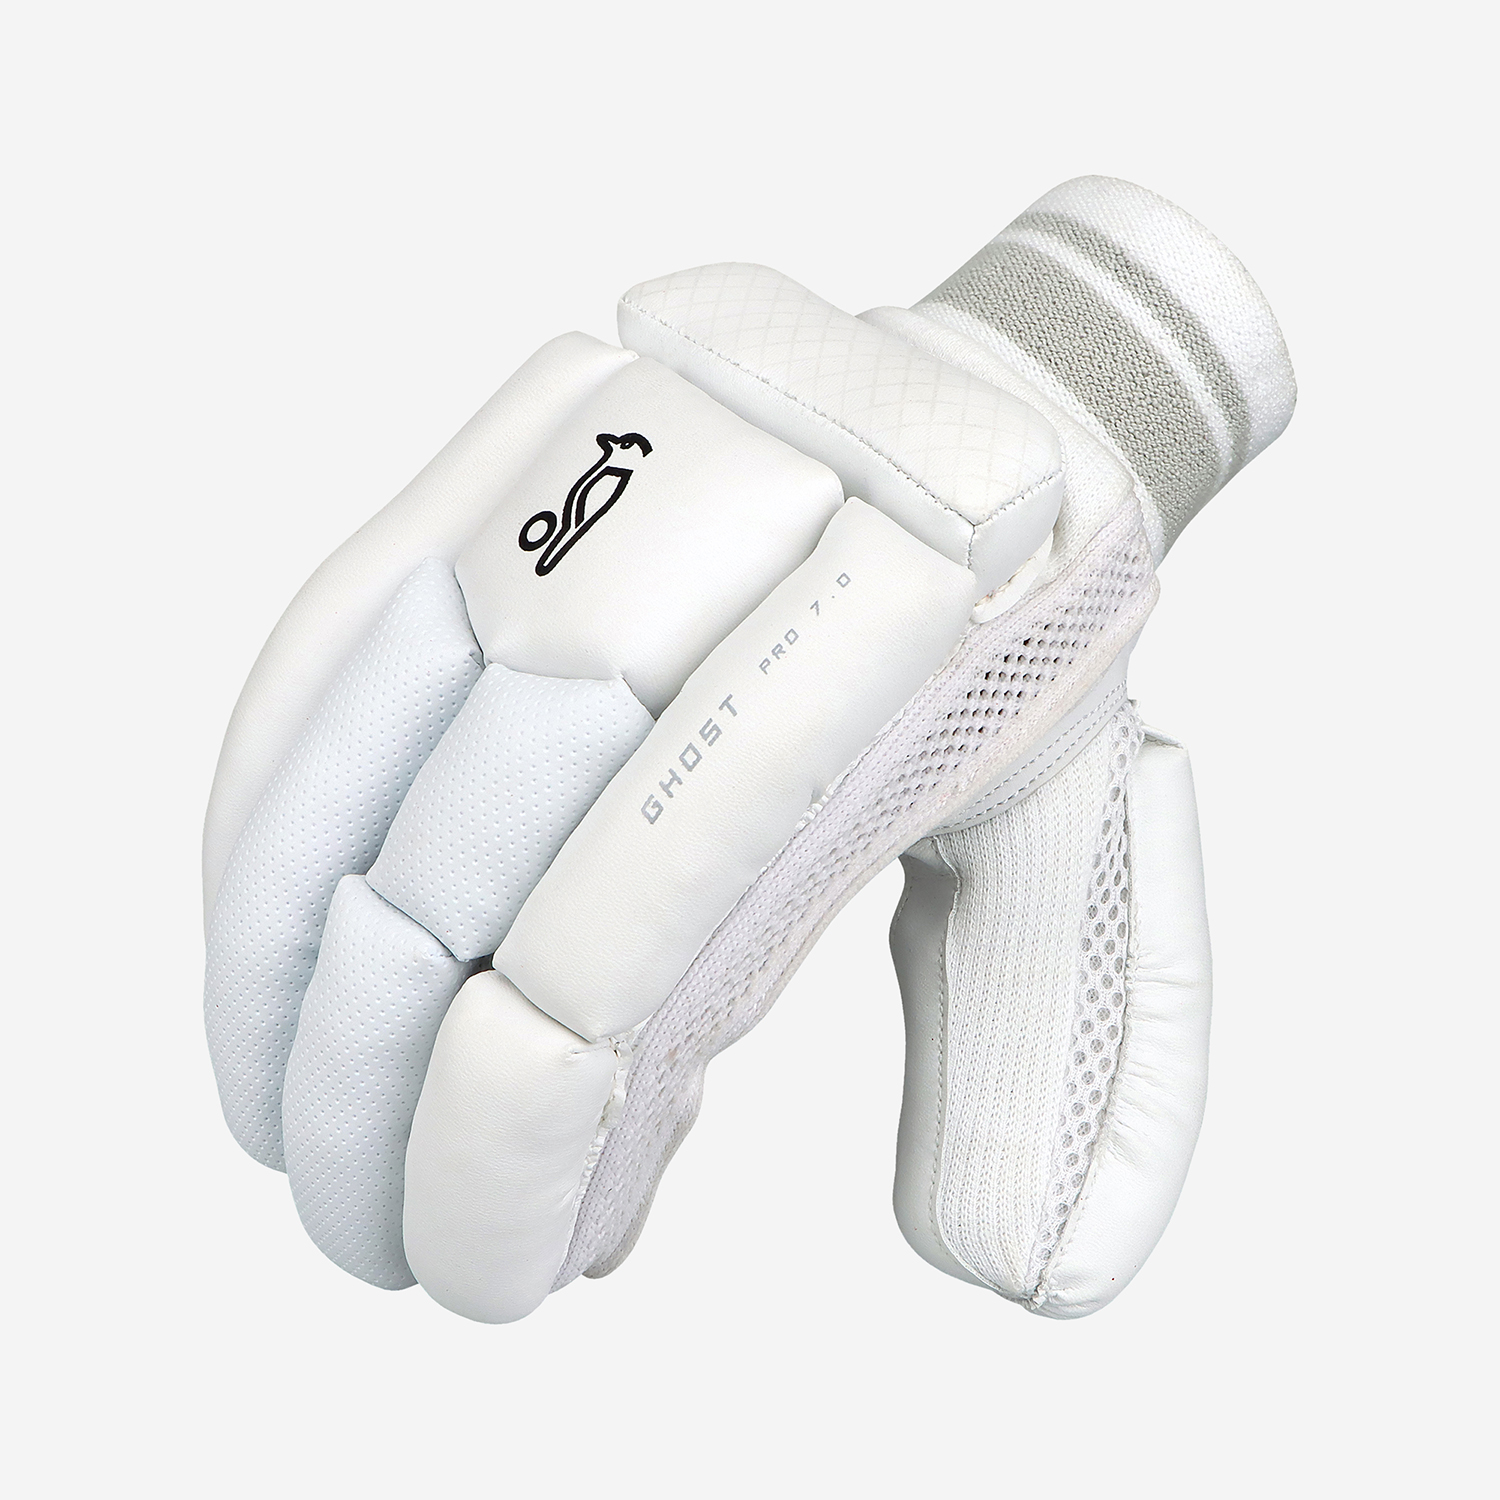 Pro 7.0 Ghost Batting Gloves